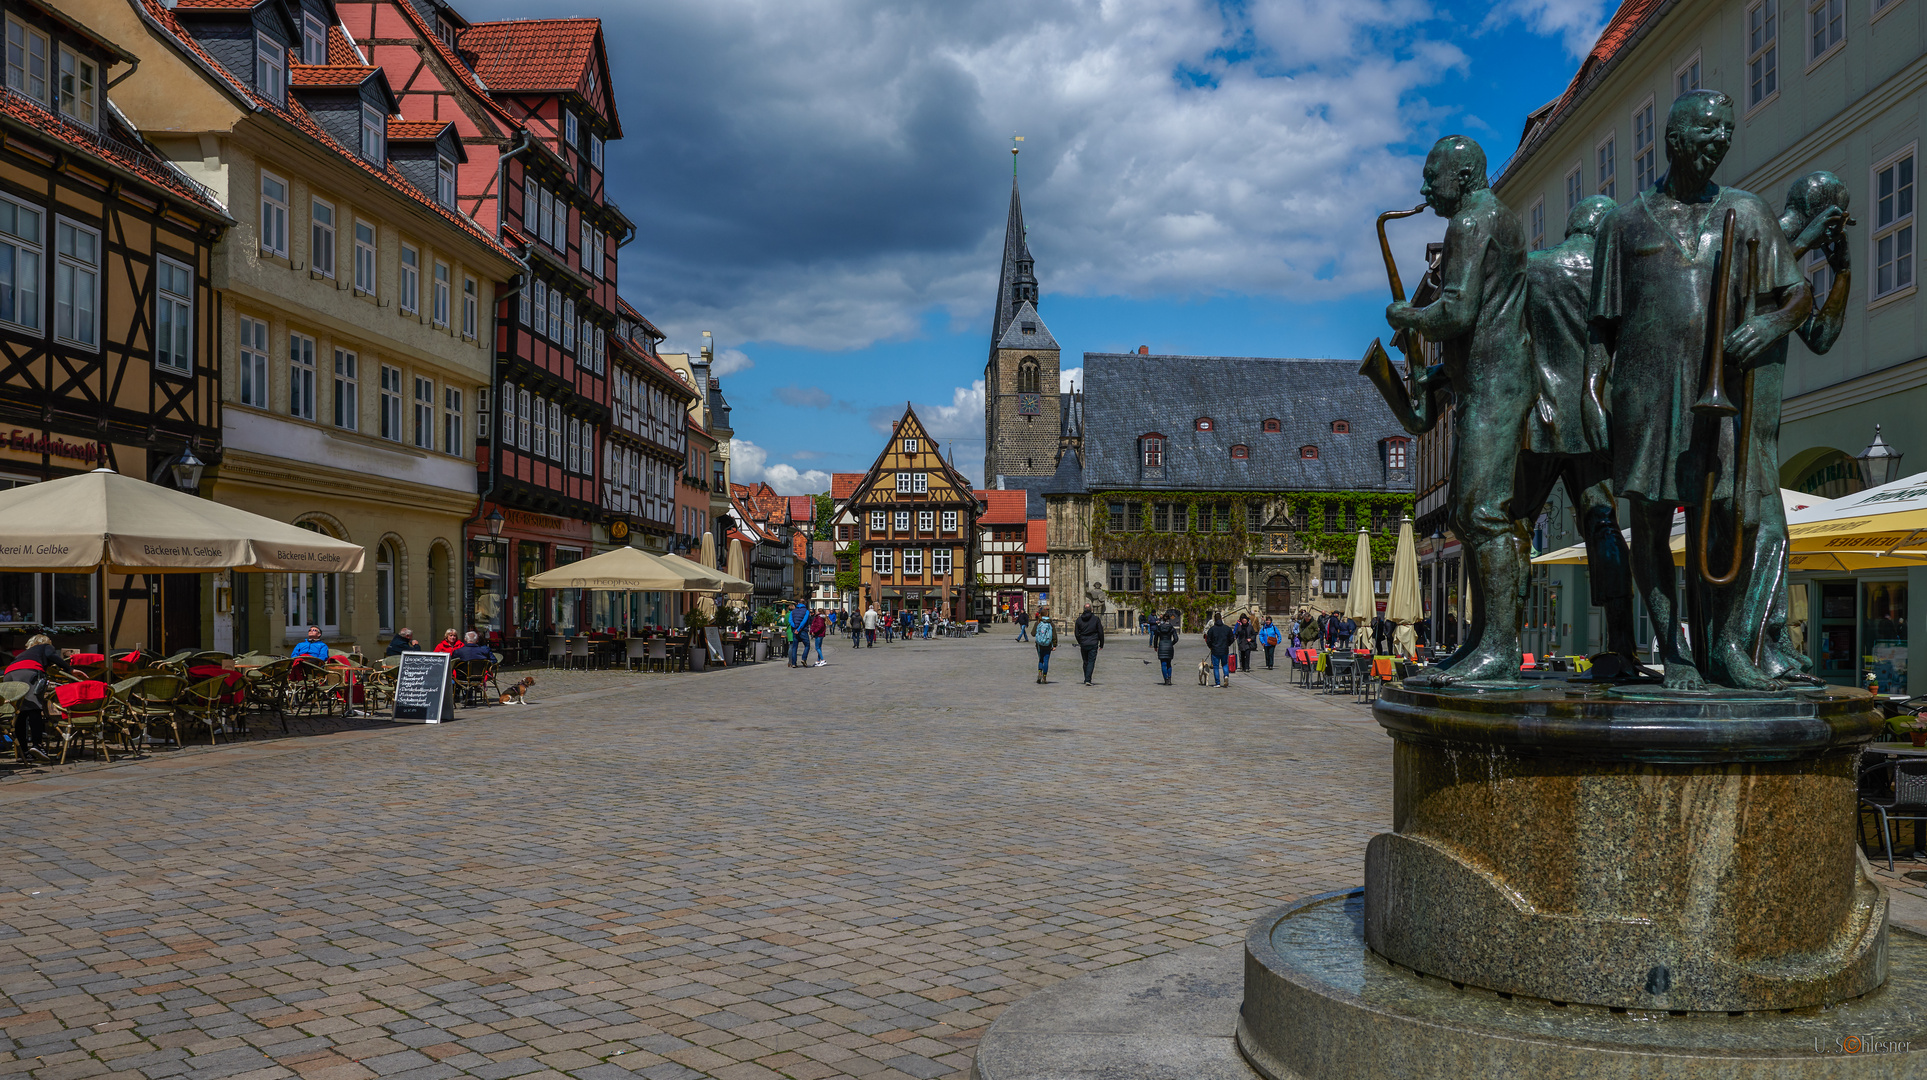 Quedlinburger Marktplatz